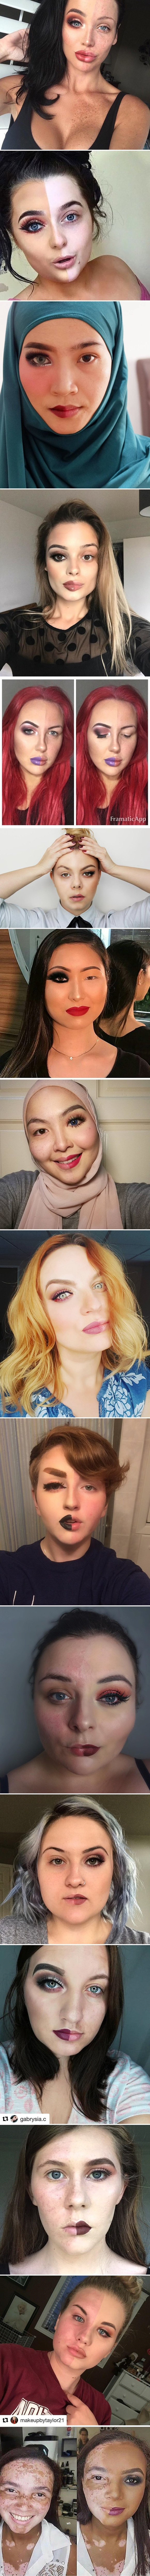 Novi trend na Instagramu: Djevojke našminkale pola lica, slikale se i začudile svoje pratitelje